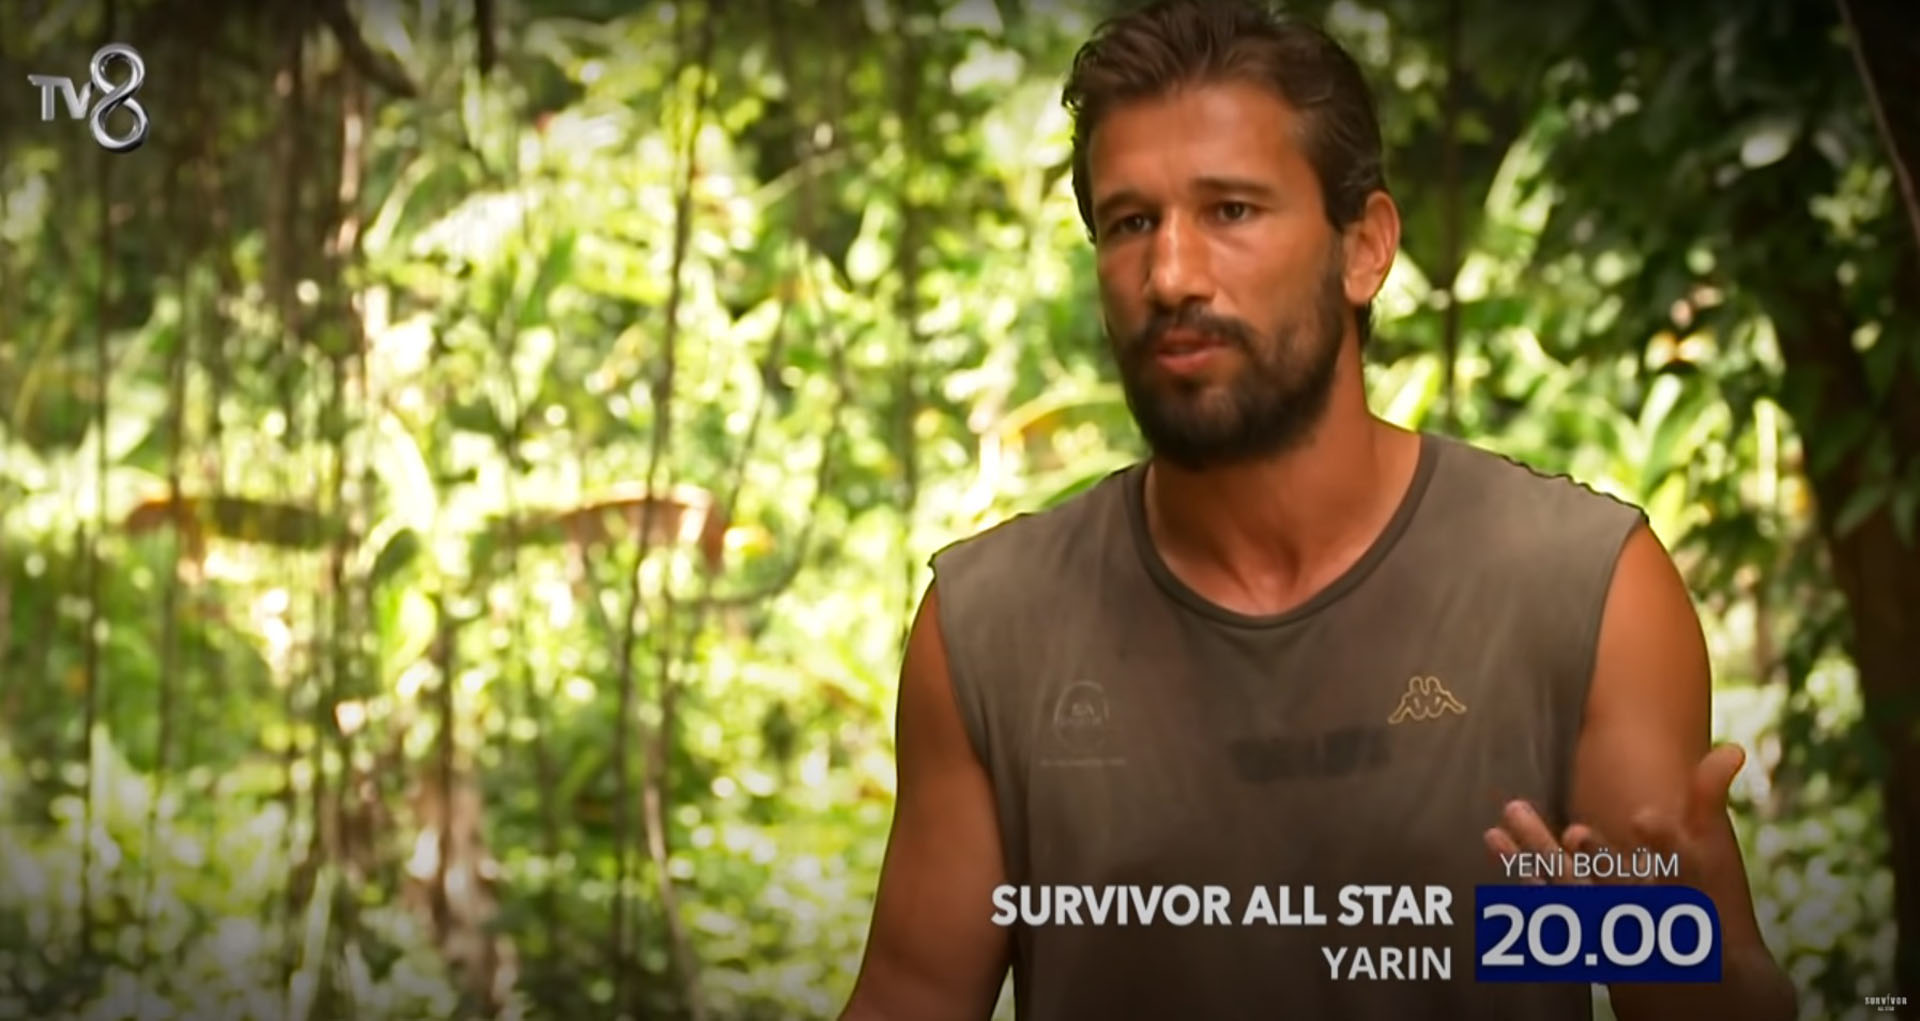 TV8 Survivor All Star 108. bölüm full, tek parça izle | Survivor All Star son bölüm izle Youtube